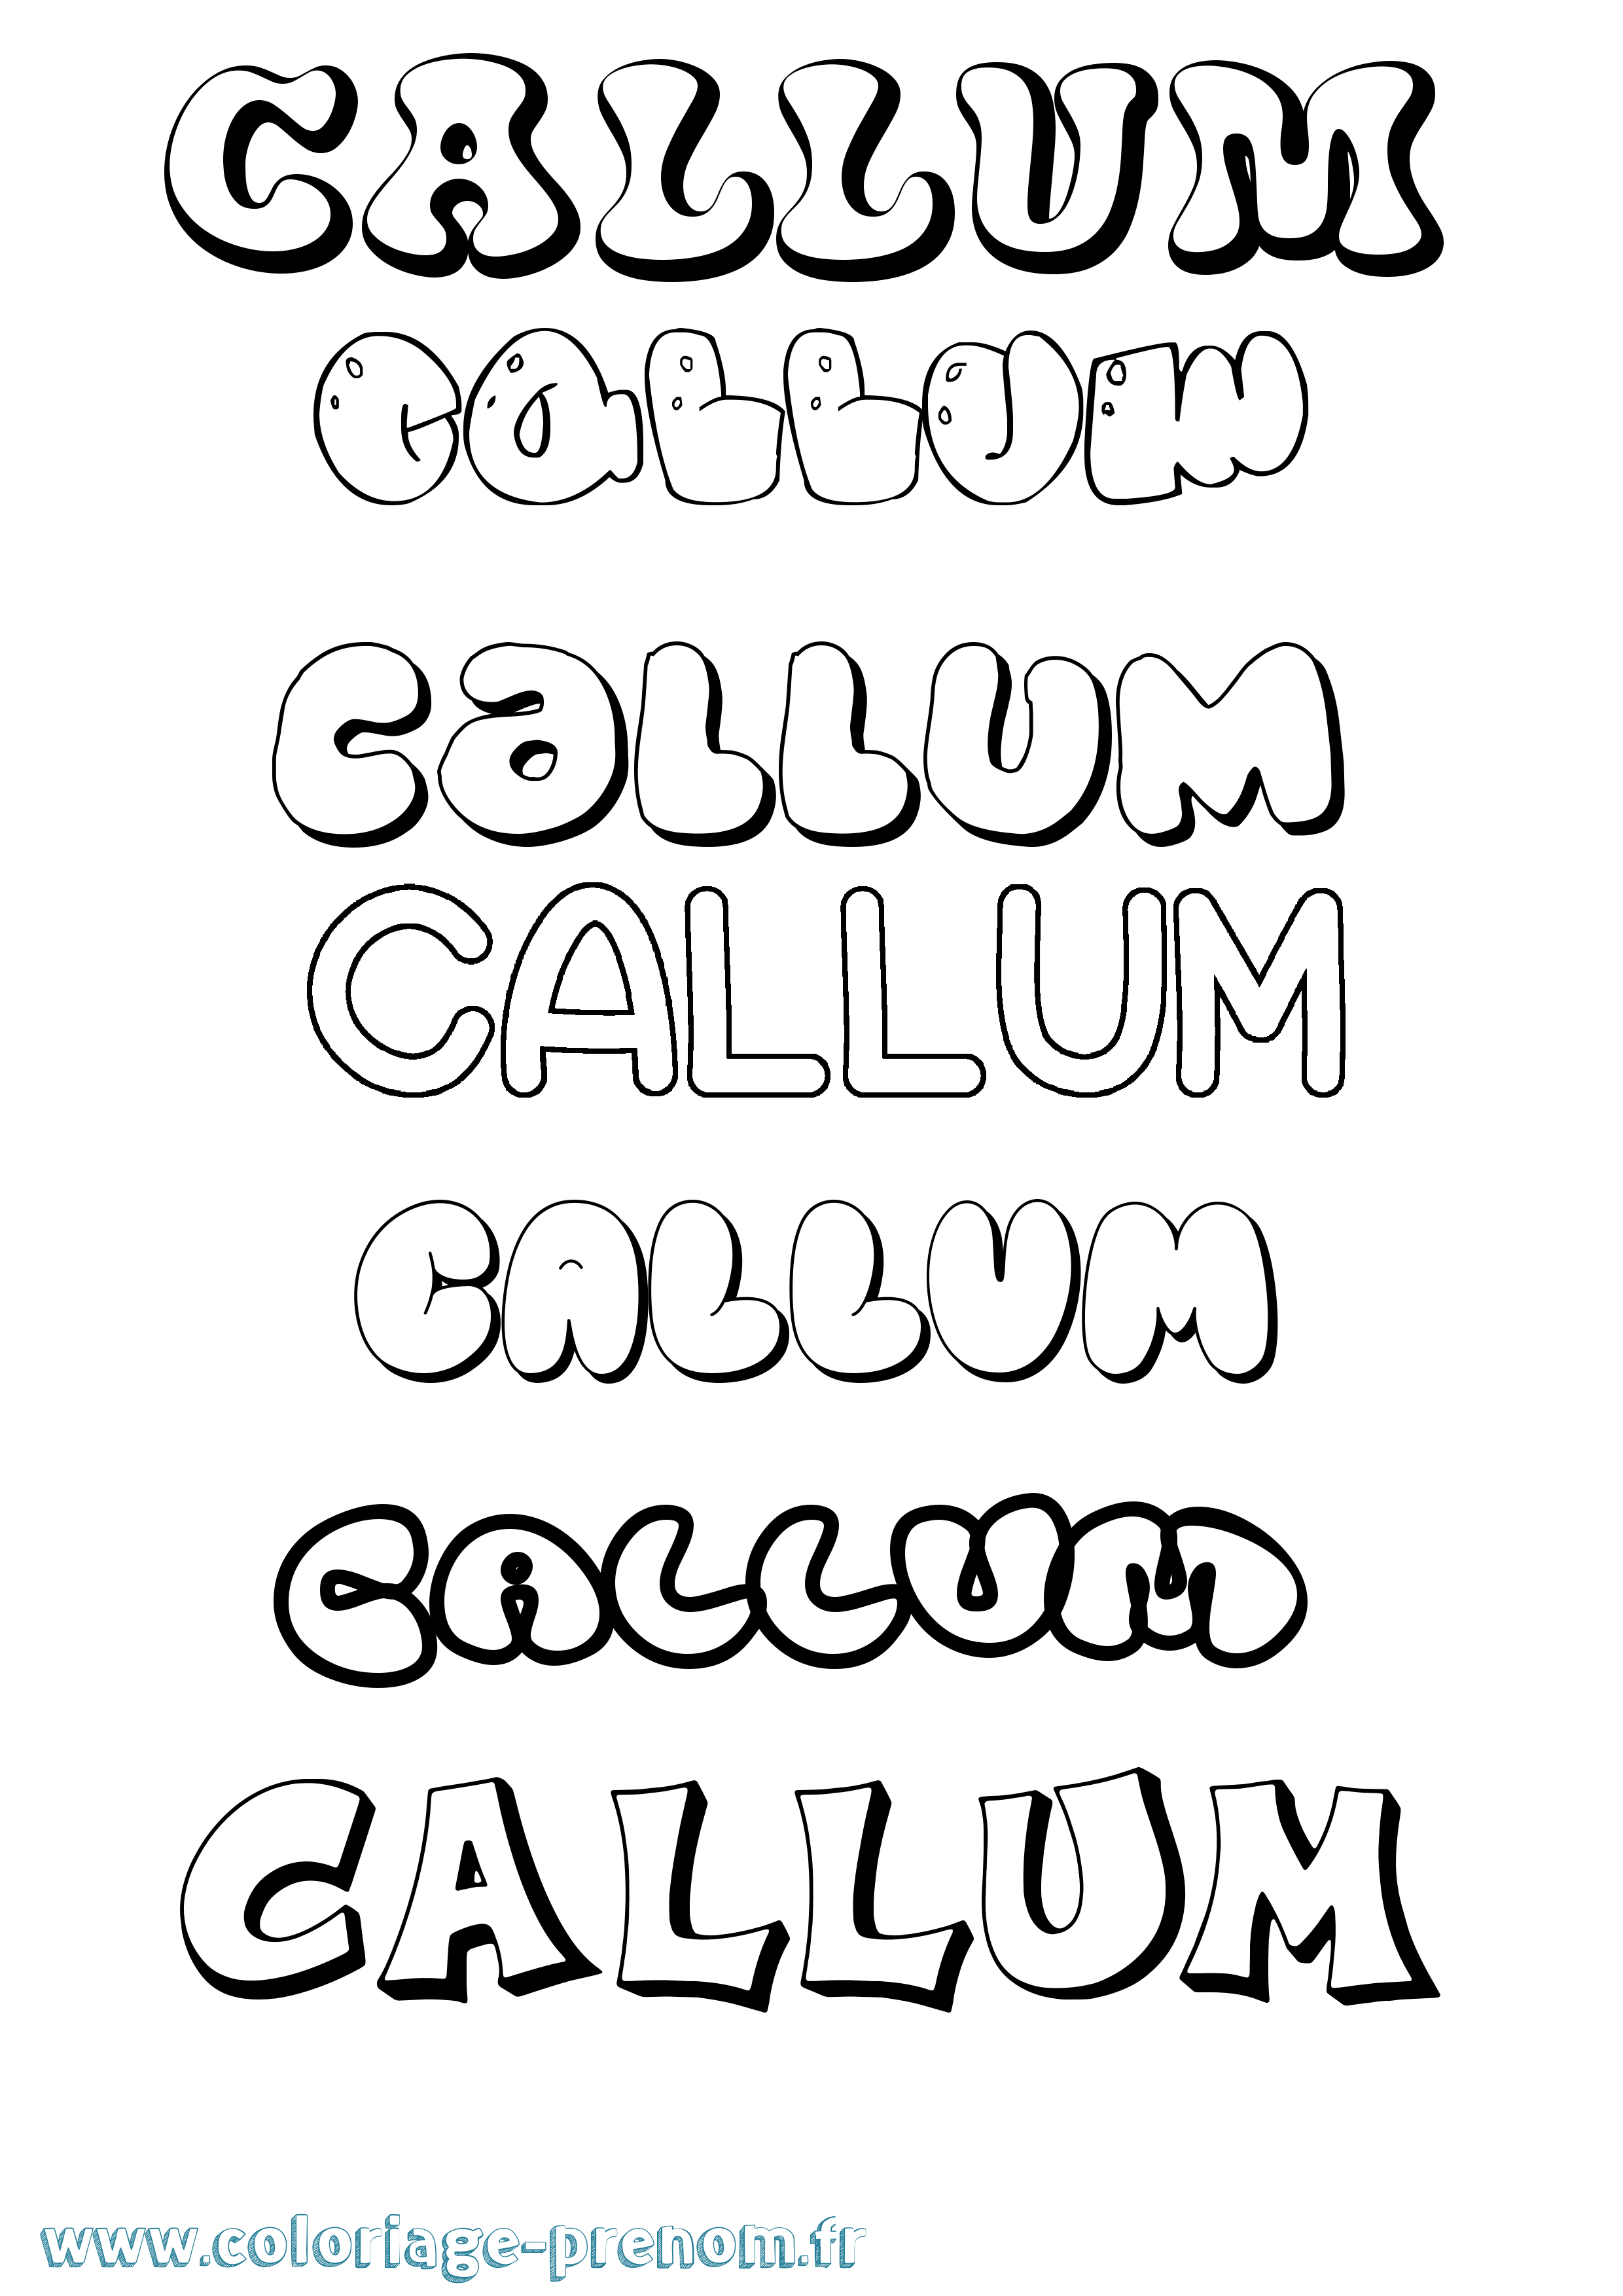 Coloriage prénom Callum Bubble